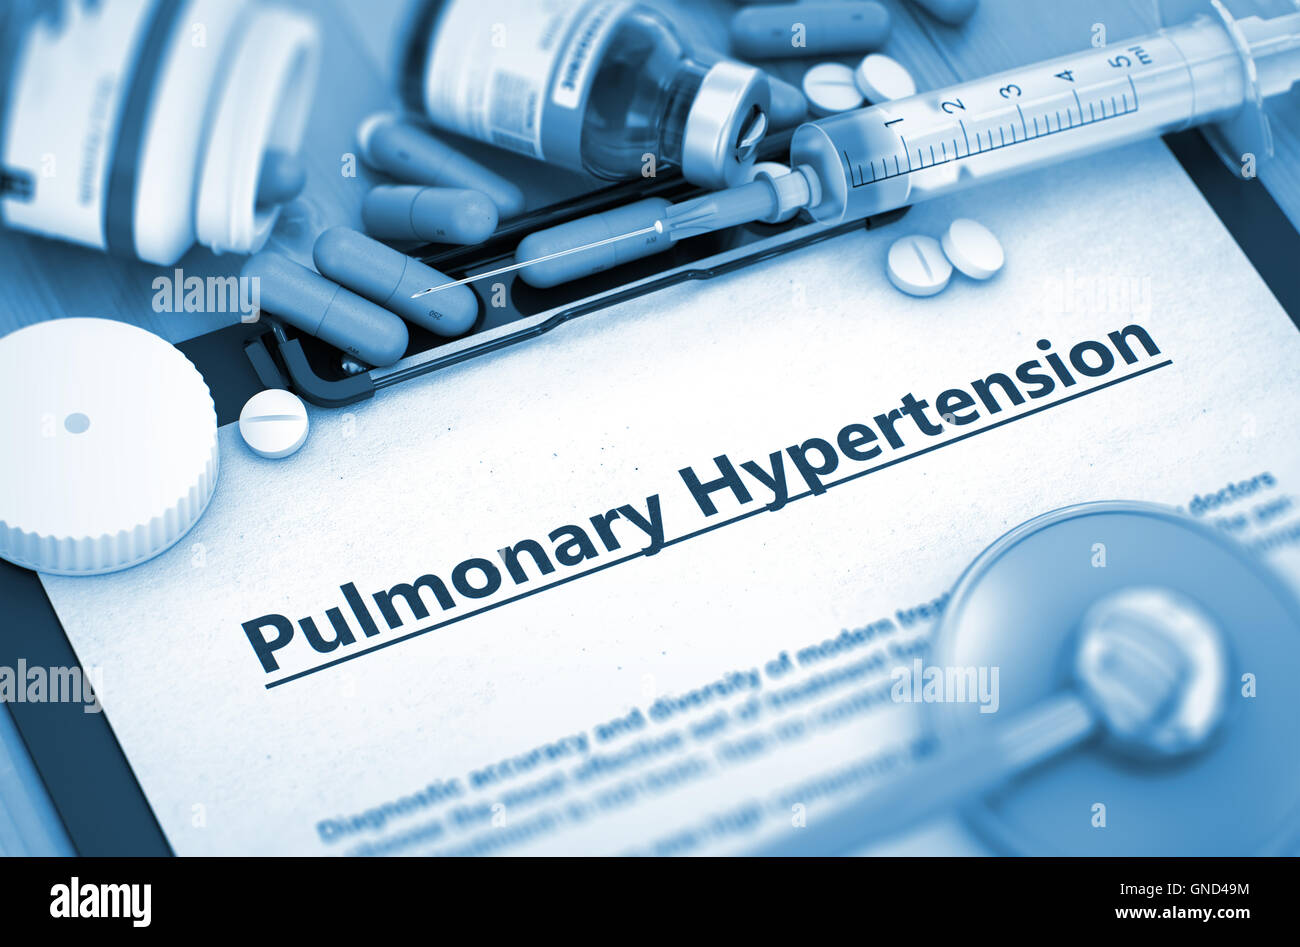 Pulmonary Hypertension Diagnosis. Medical Concept. Stock Photo